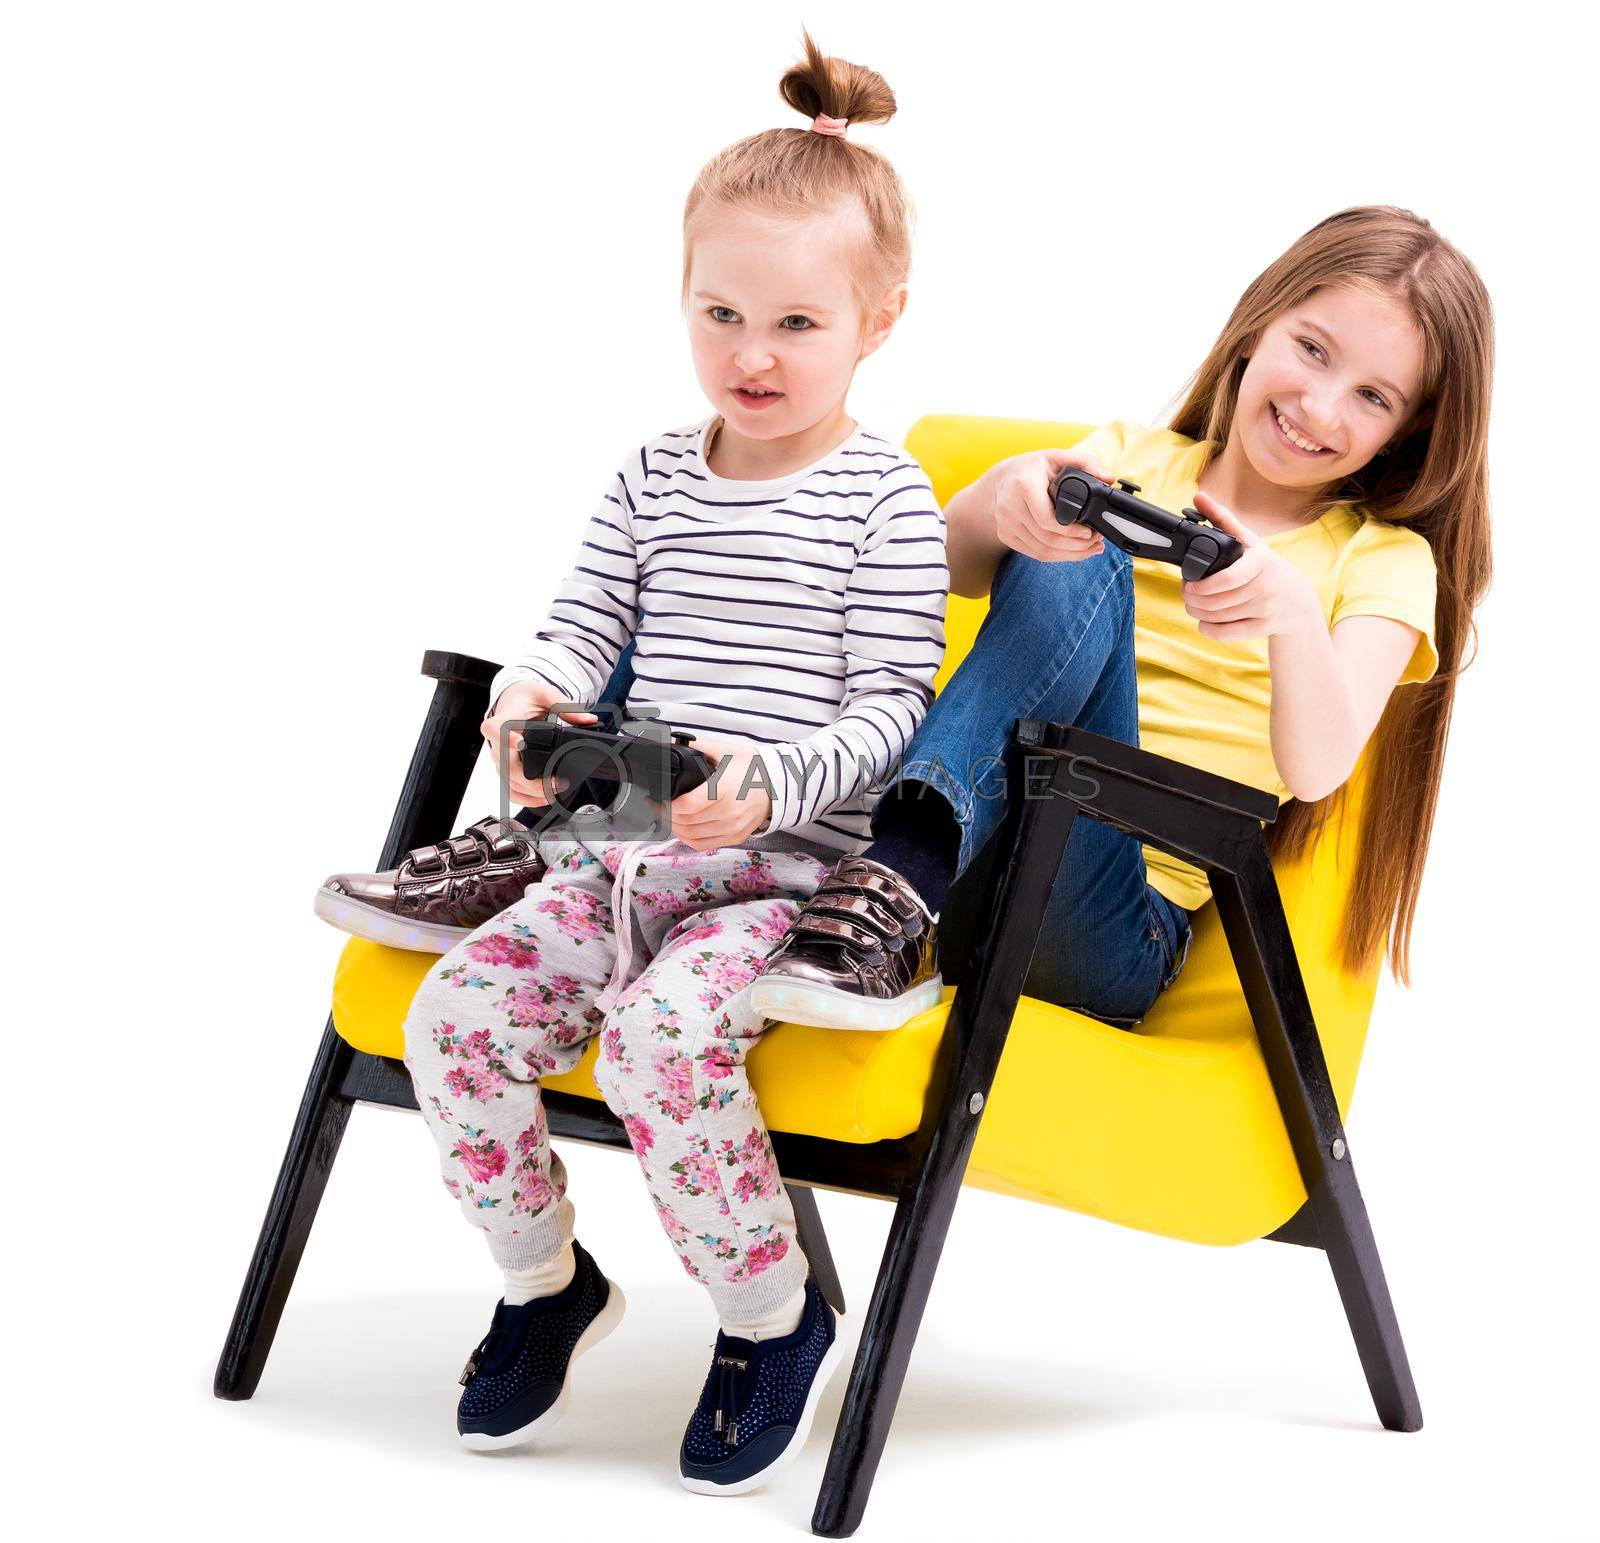 Royalty free image of Siblings playing battles with joystick by GekaSkr